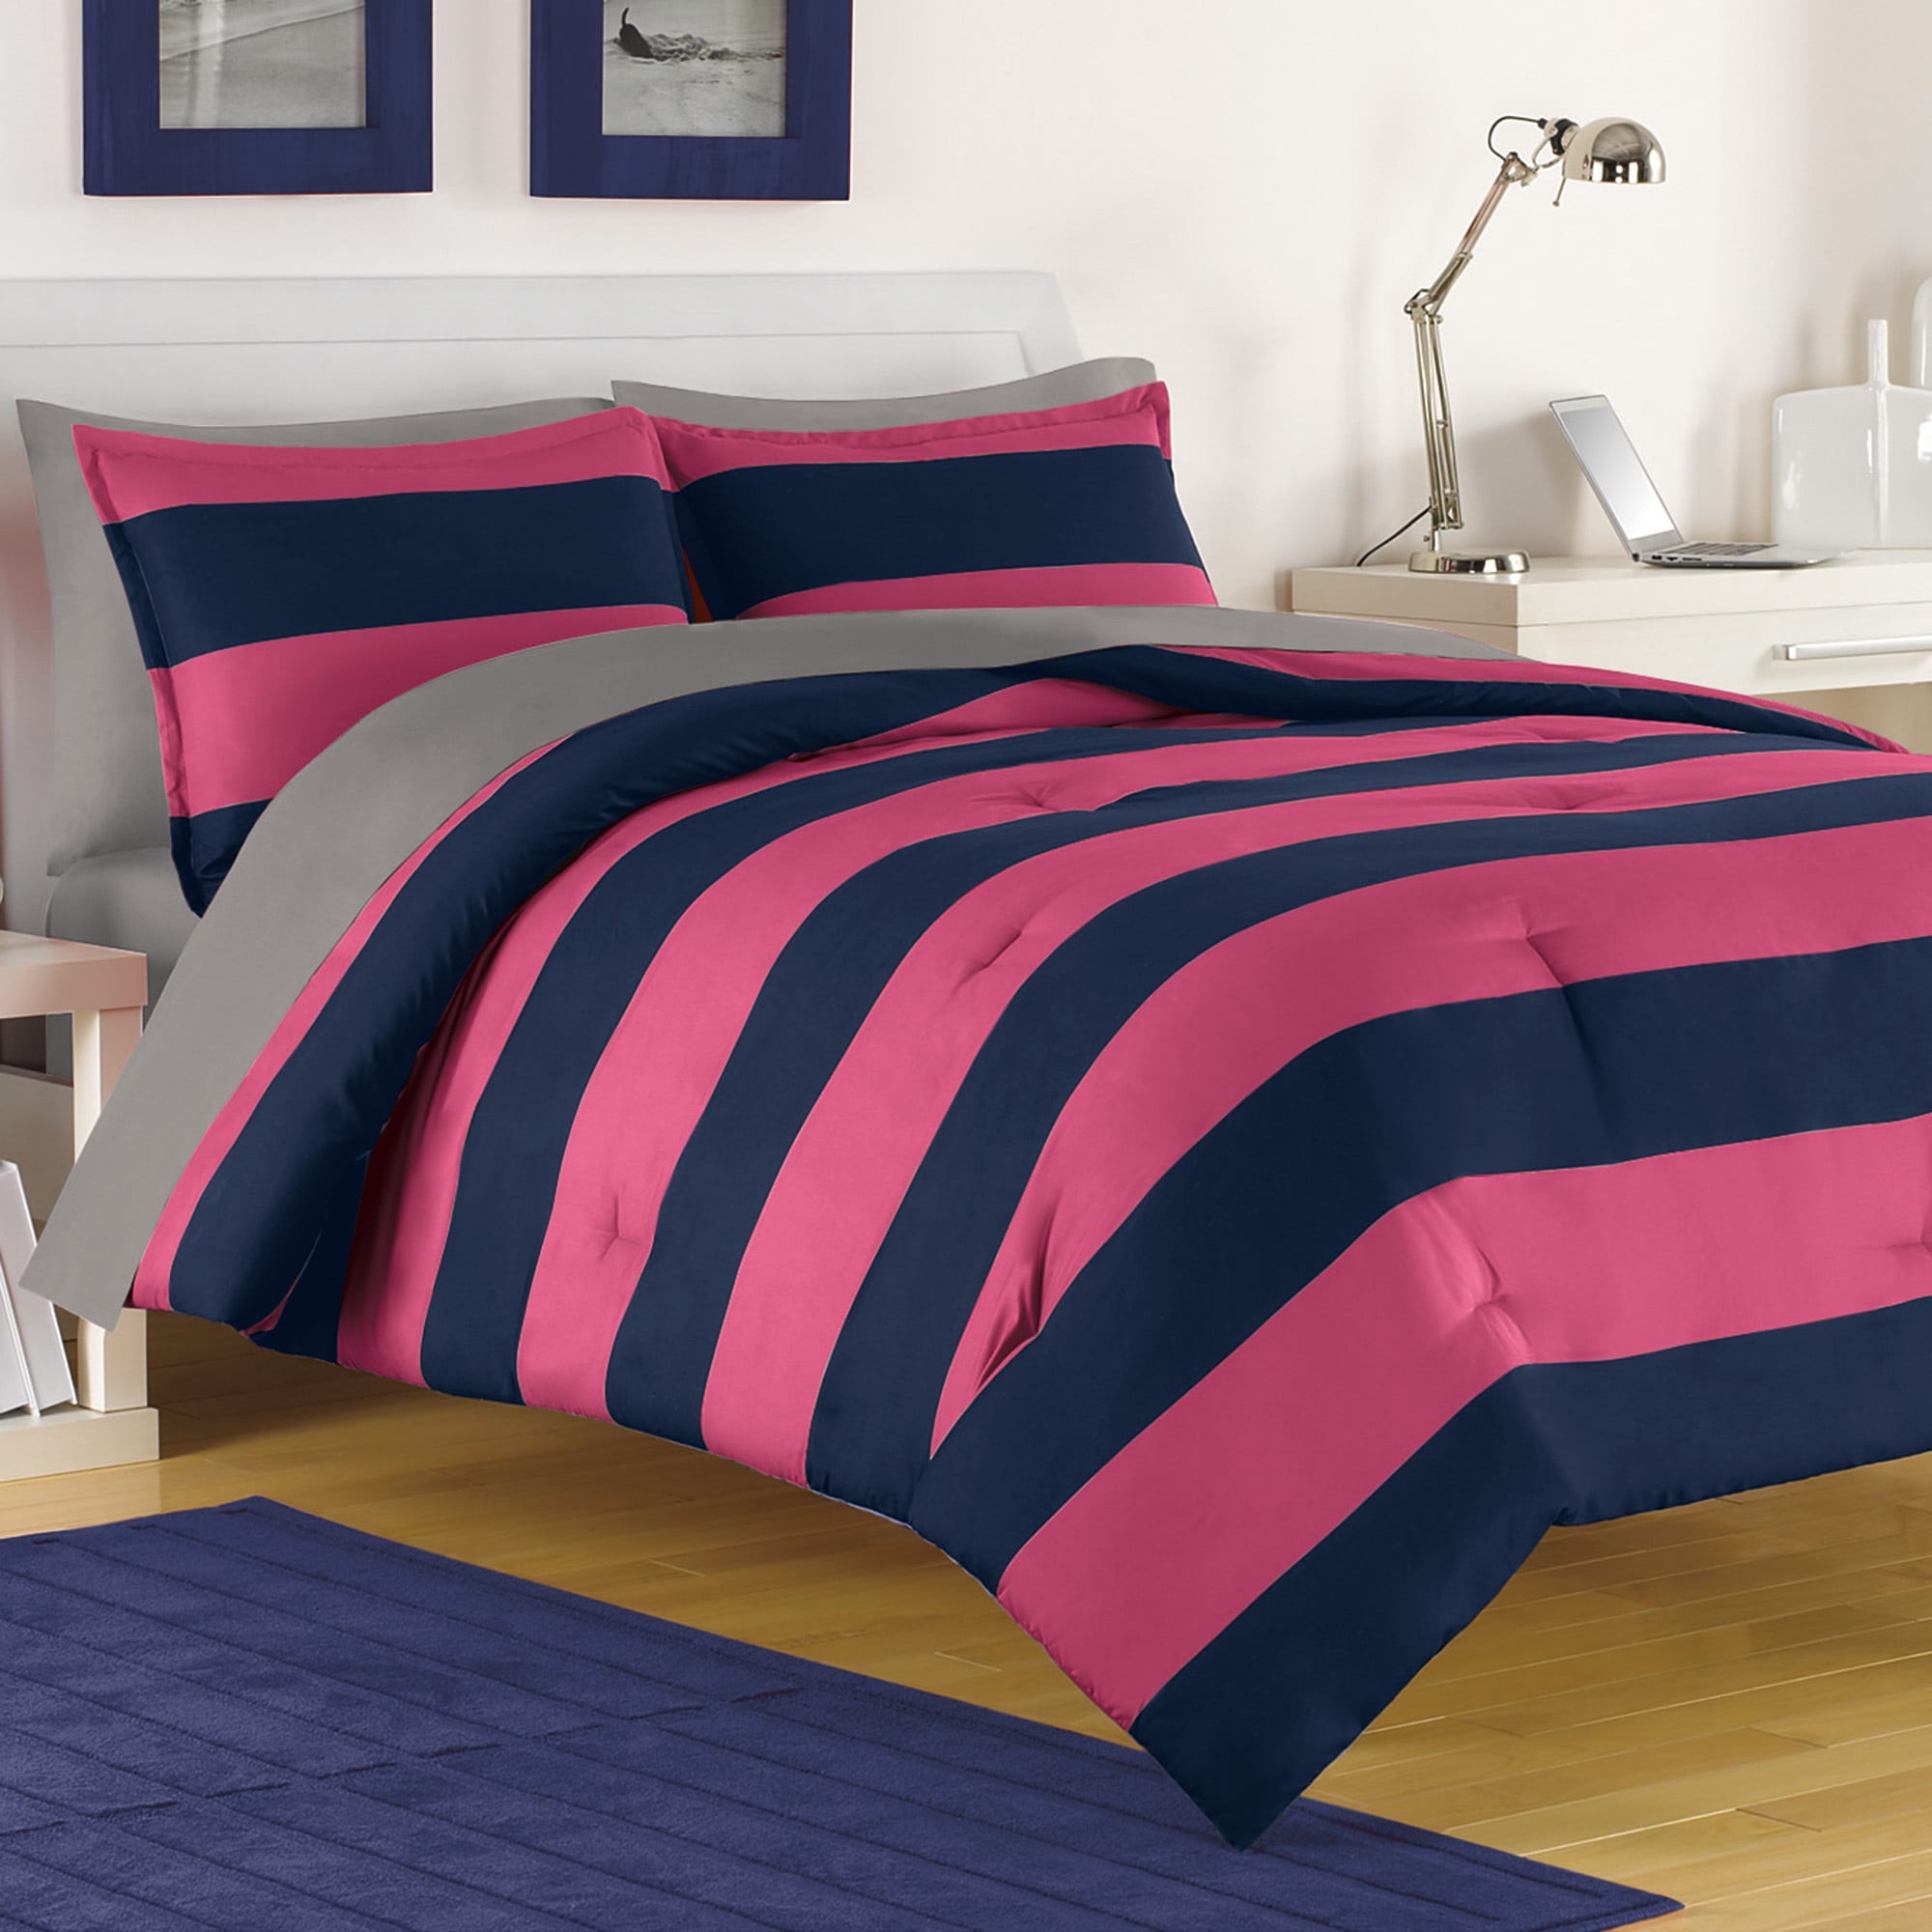 Shop Izod Rugby Stripe Navy Pink Comforter Set Overstock 11992710